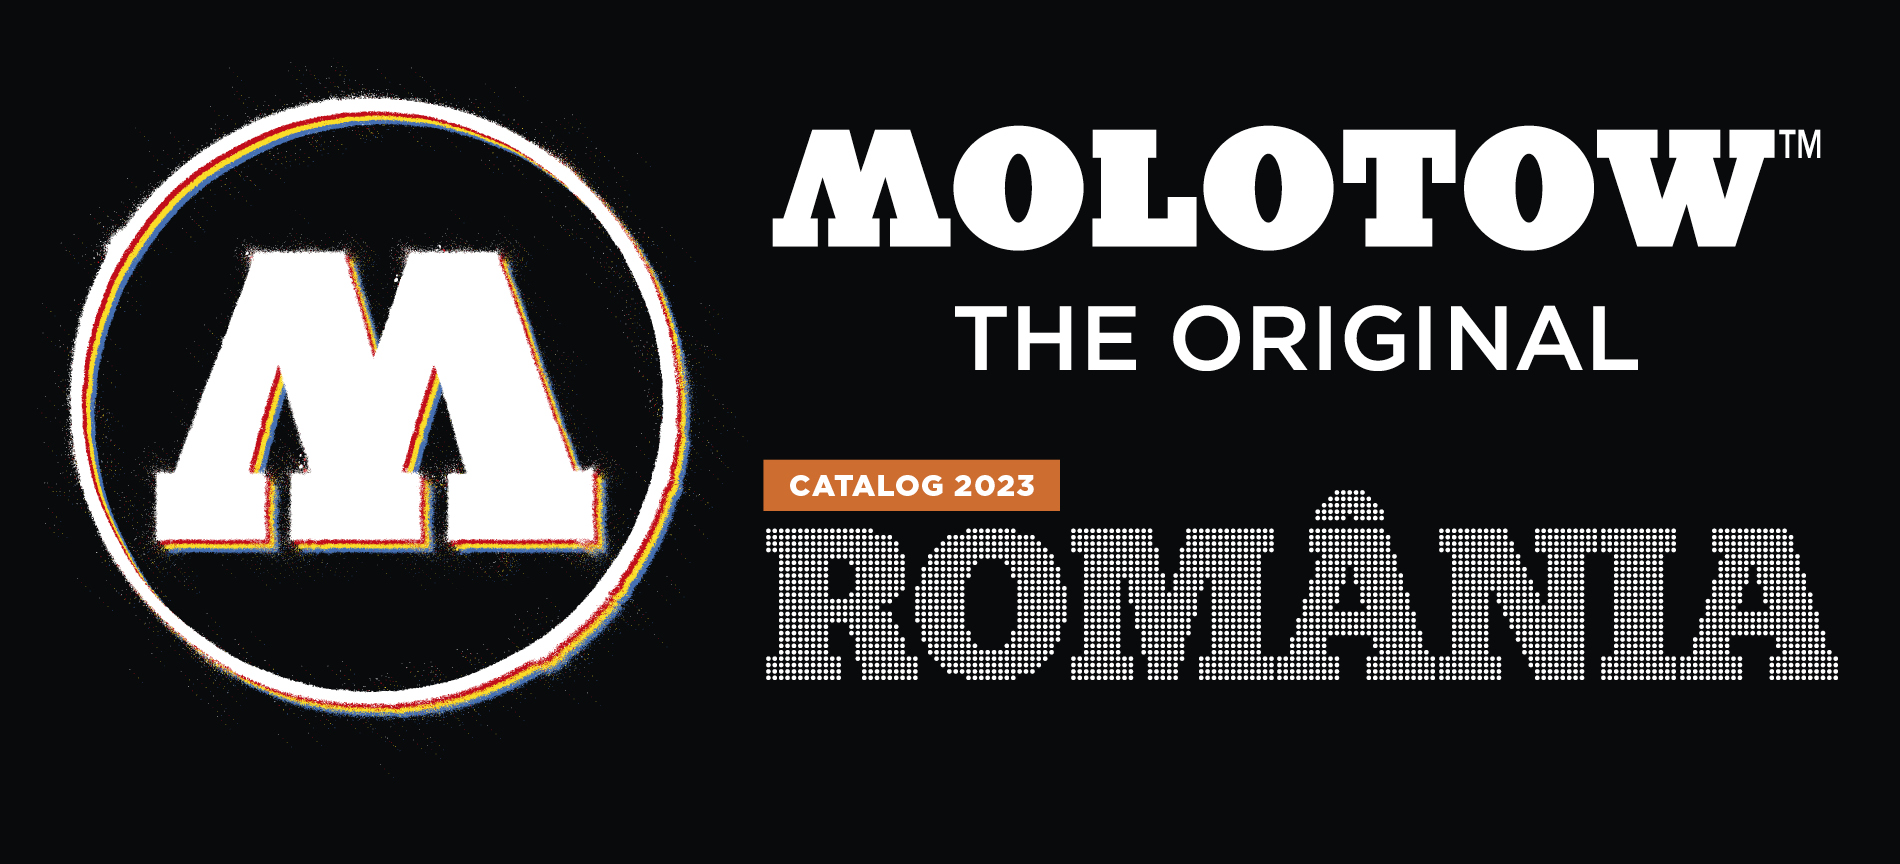 Catalog Molotow 2023